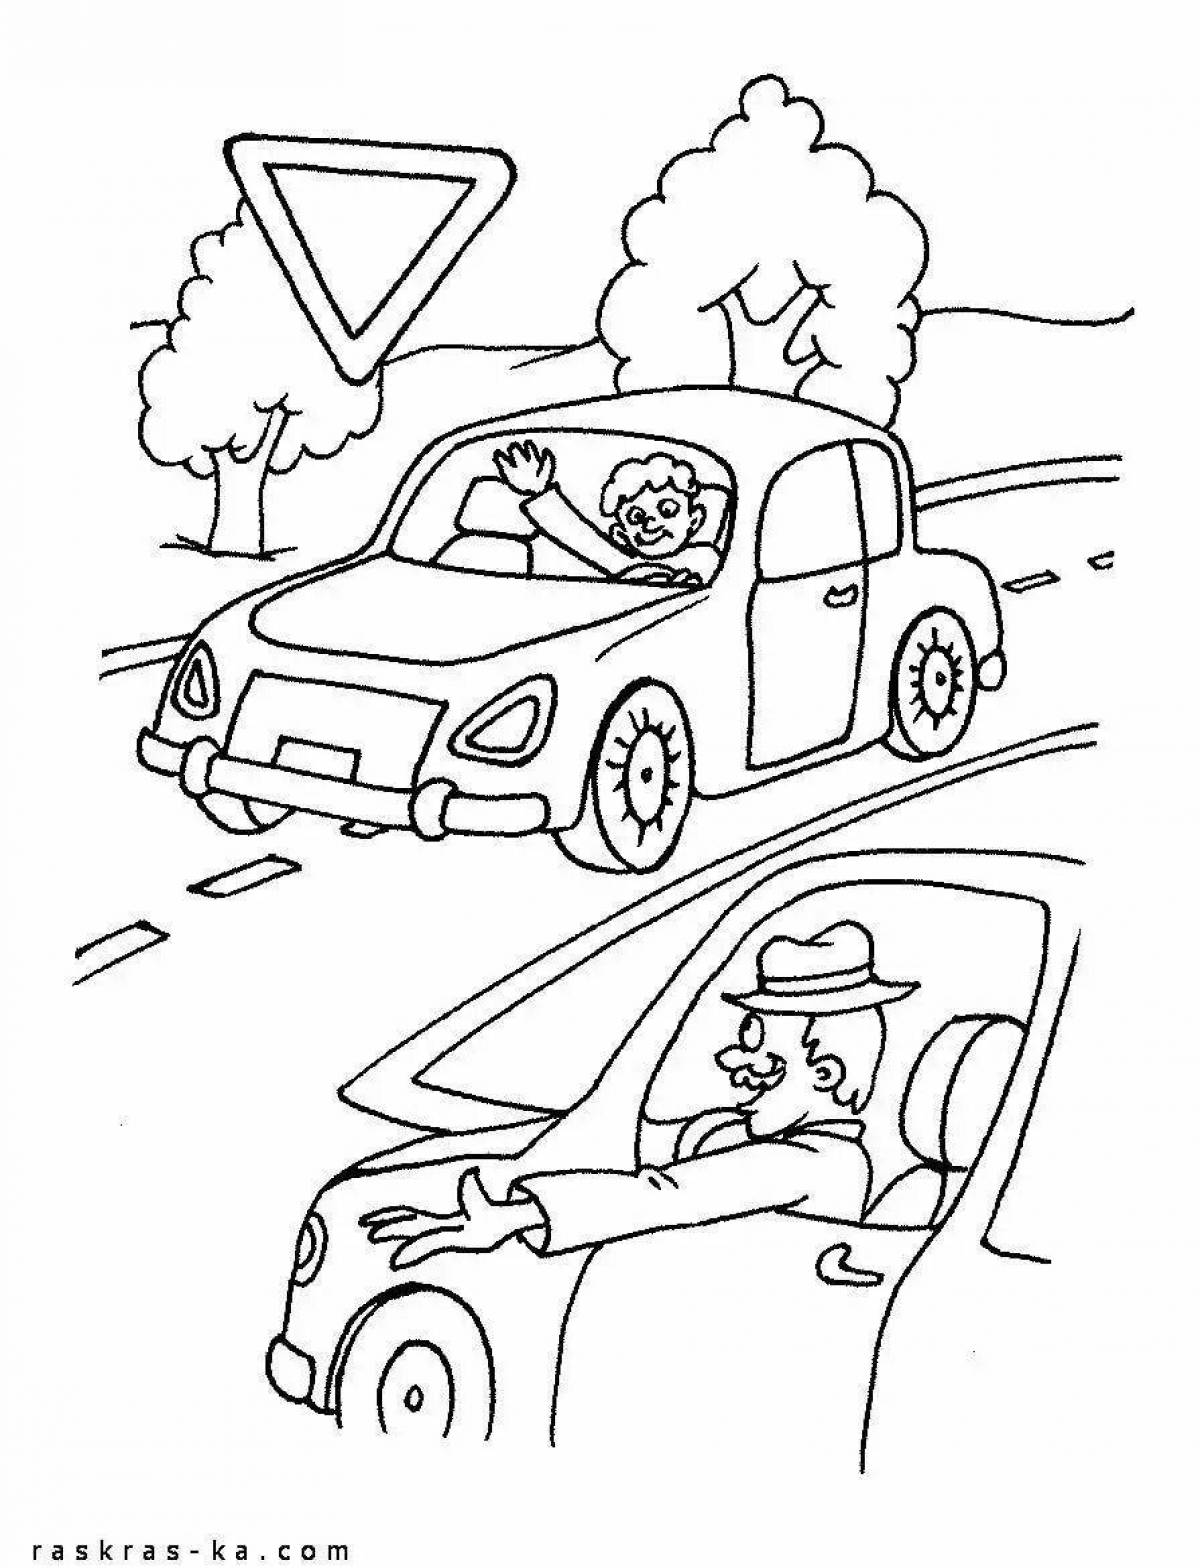 Fun vsht traffic rules coloring book